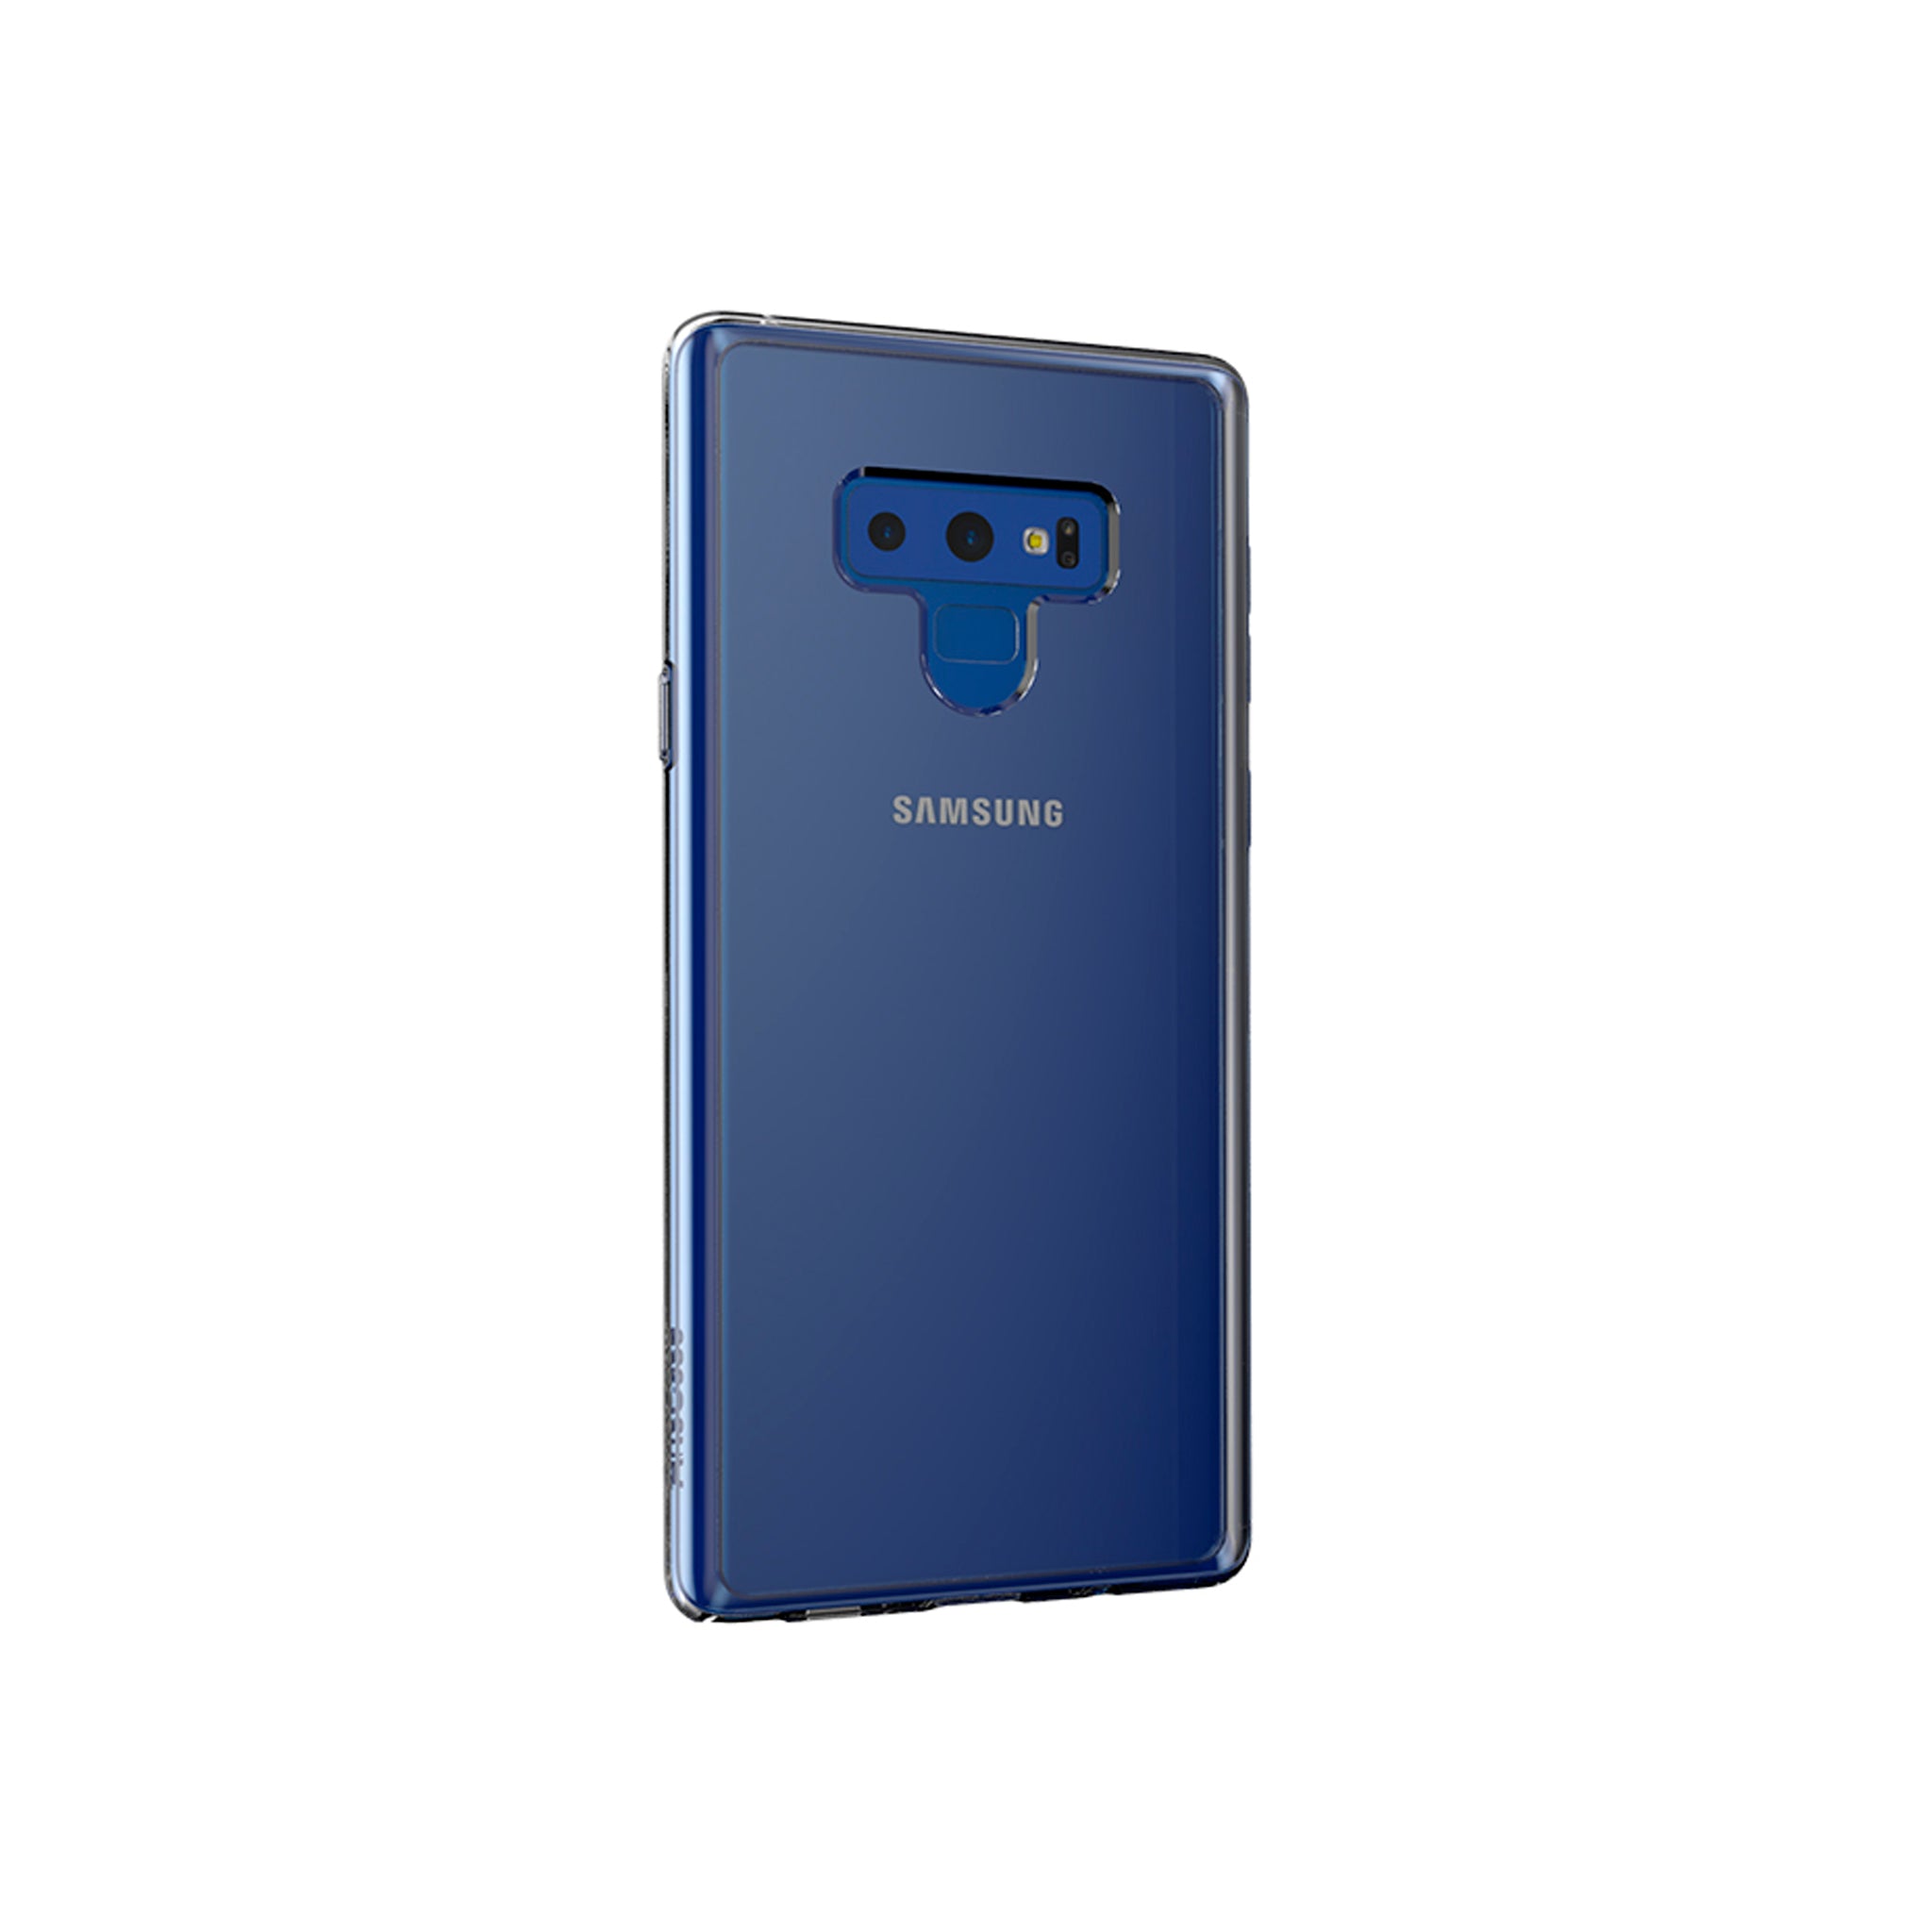 ArtsCase - Impact Hybrid  for Samsung Galaxy Note 9 - Clear